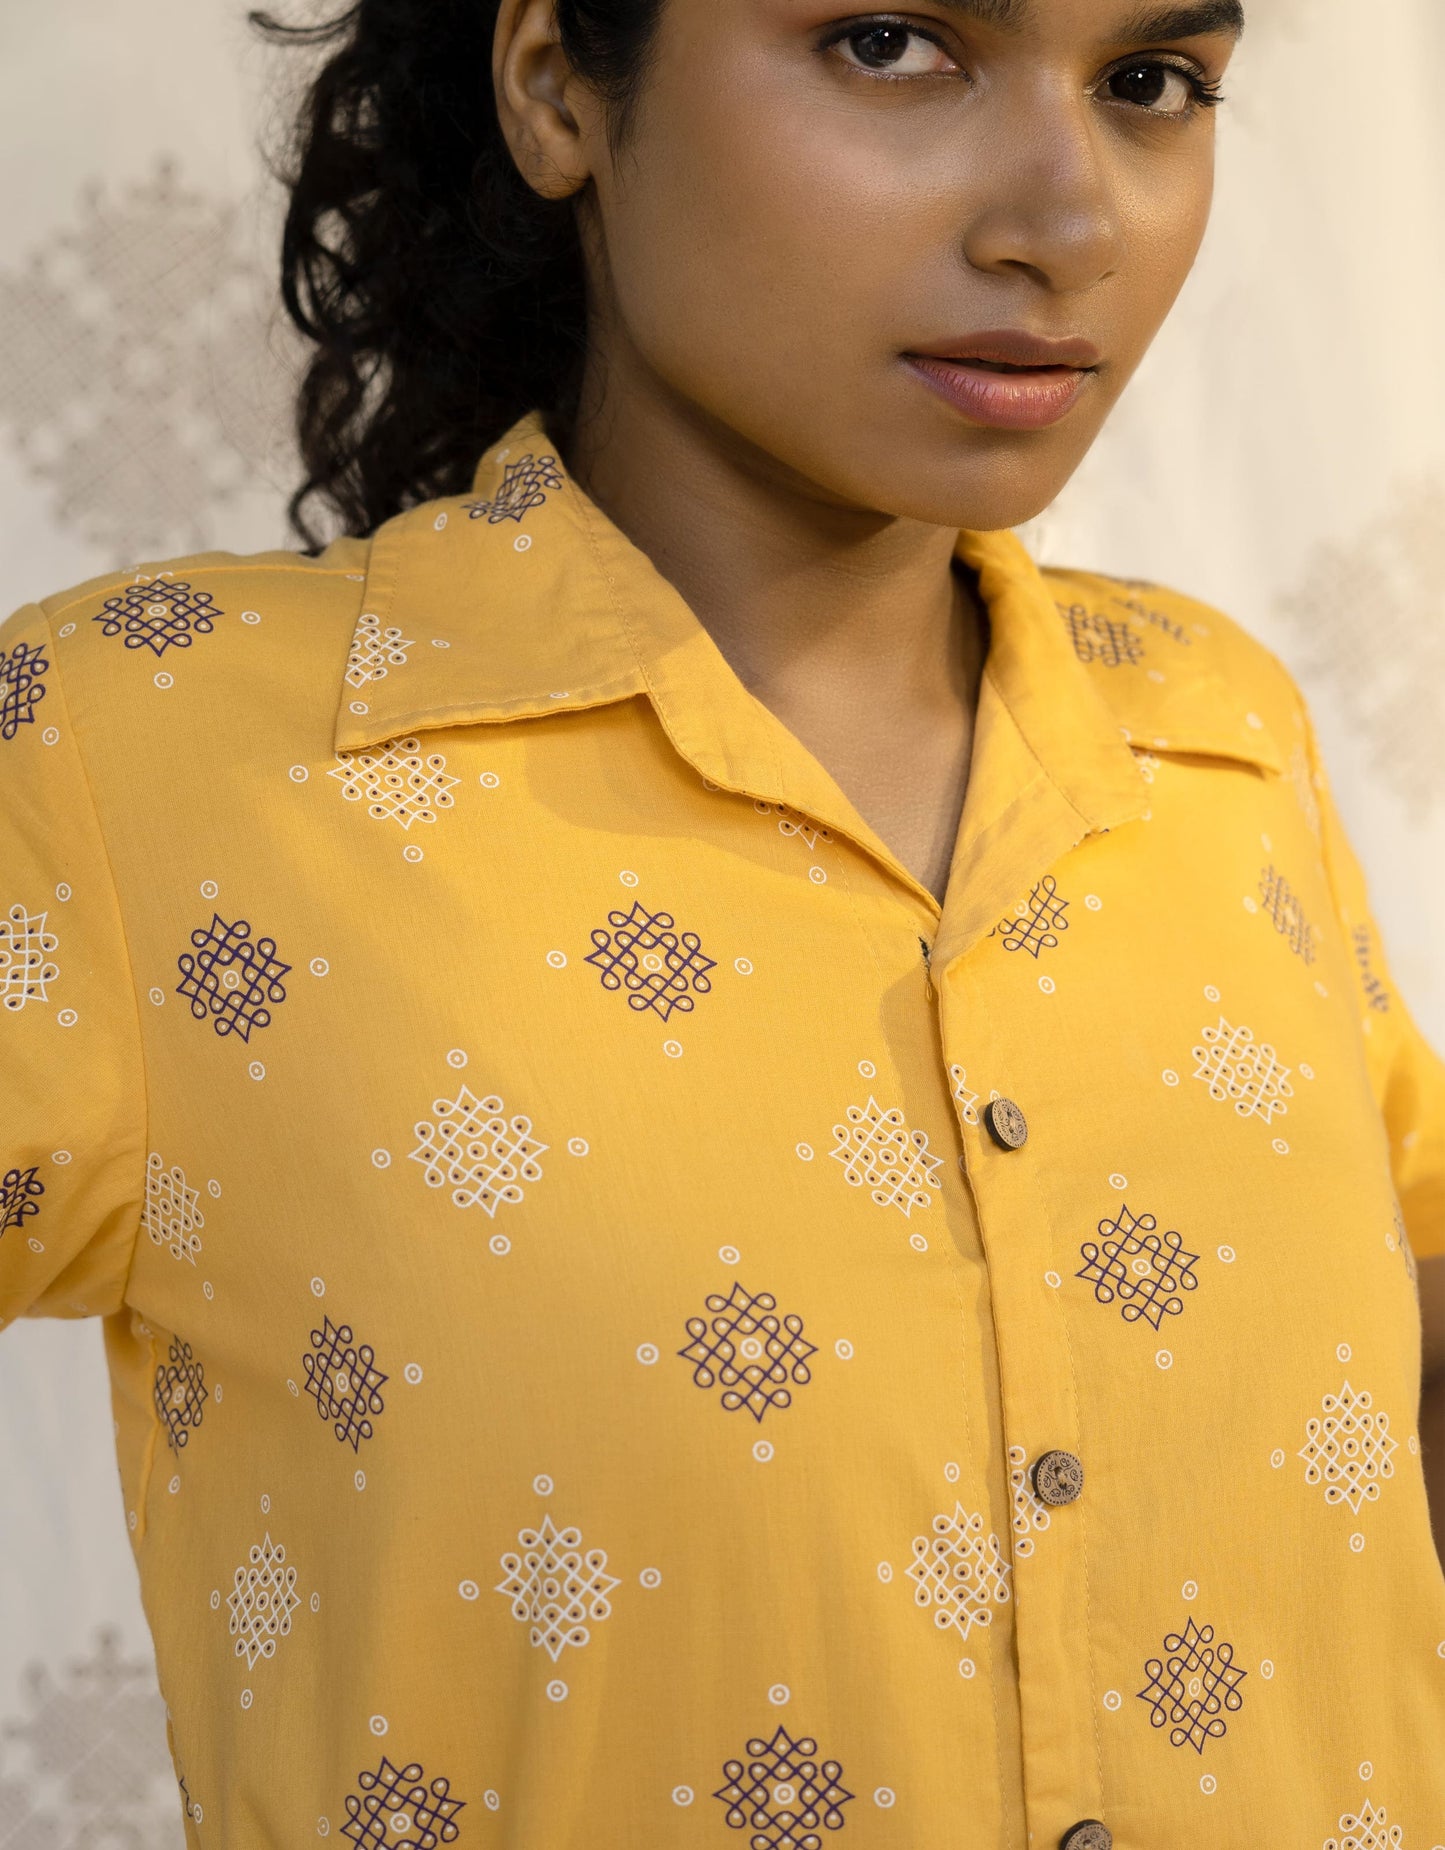 Hueloom Yellow Kolam print reversible Shirt close up view